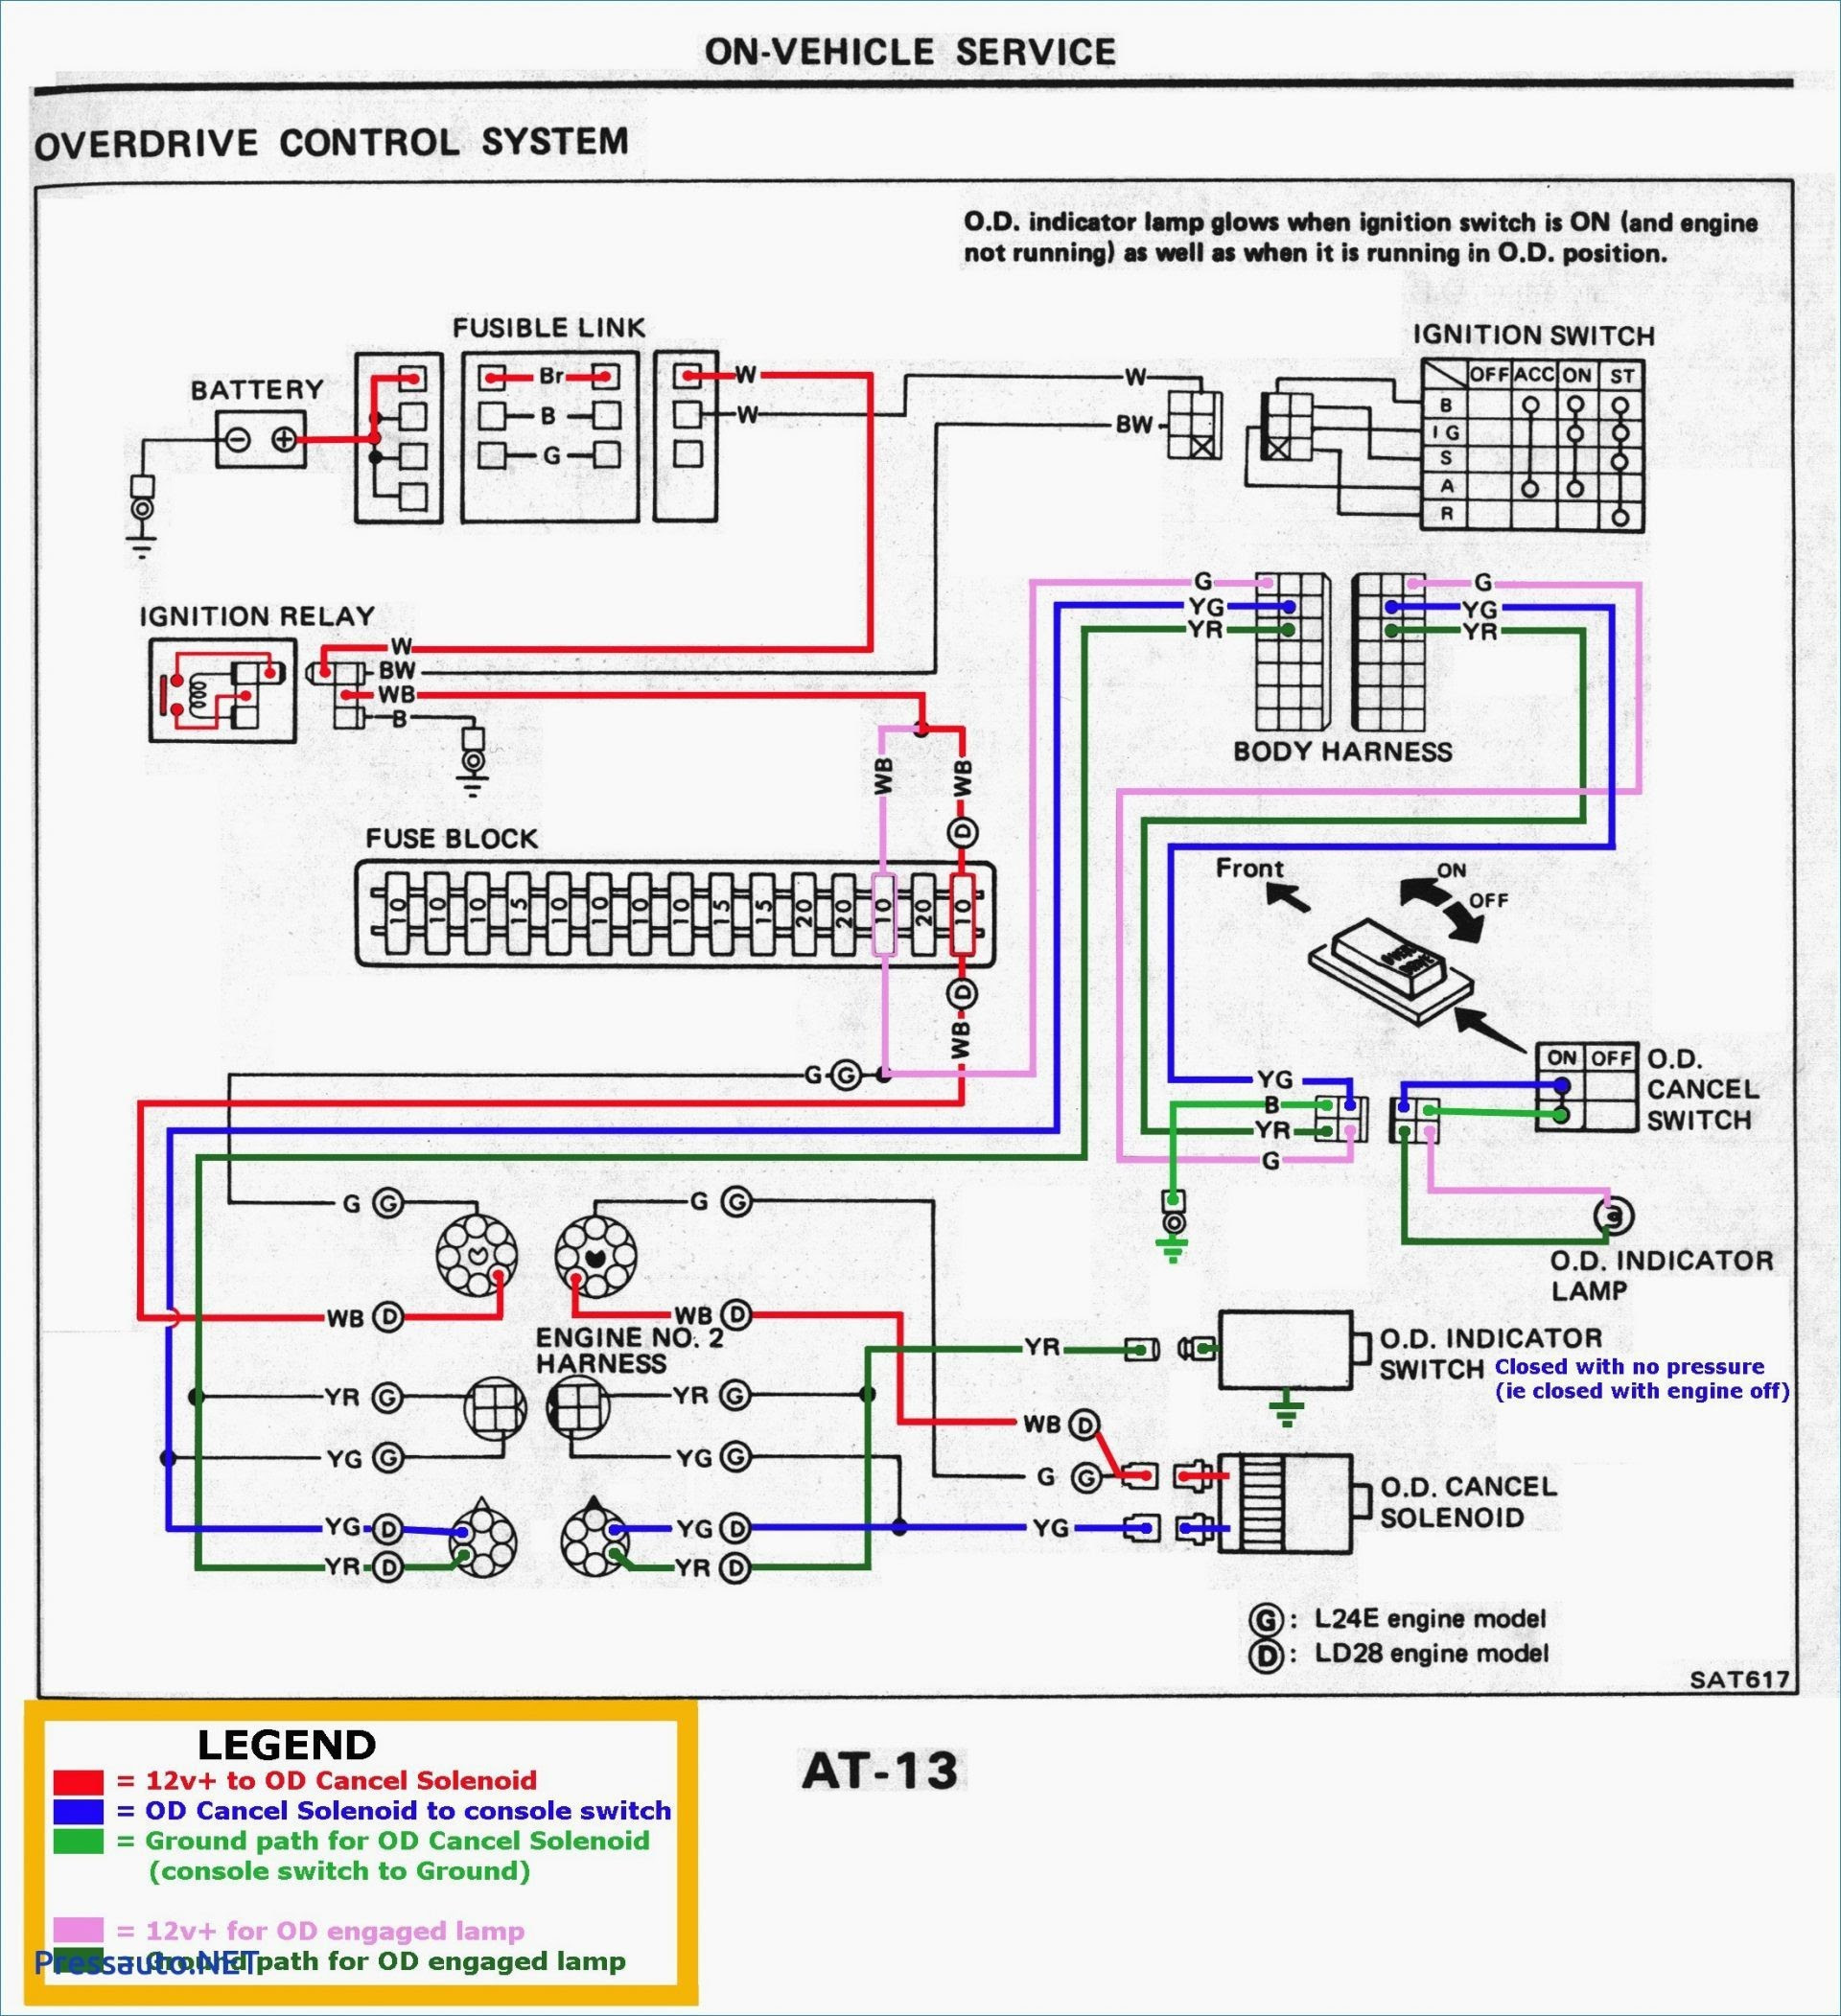 2001 7.3 Powerstroke Wiring Diagram from lh6.googleusercontent.com